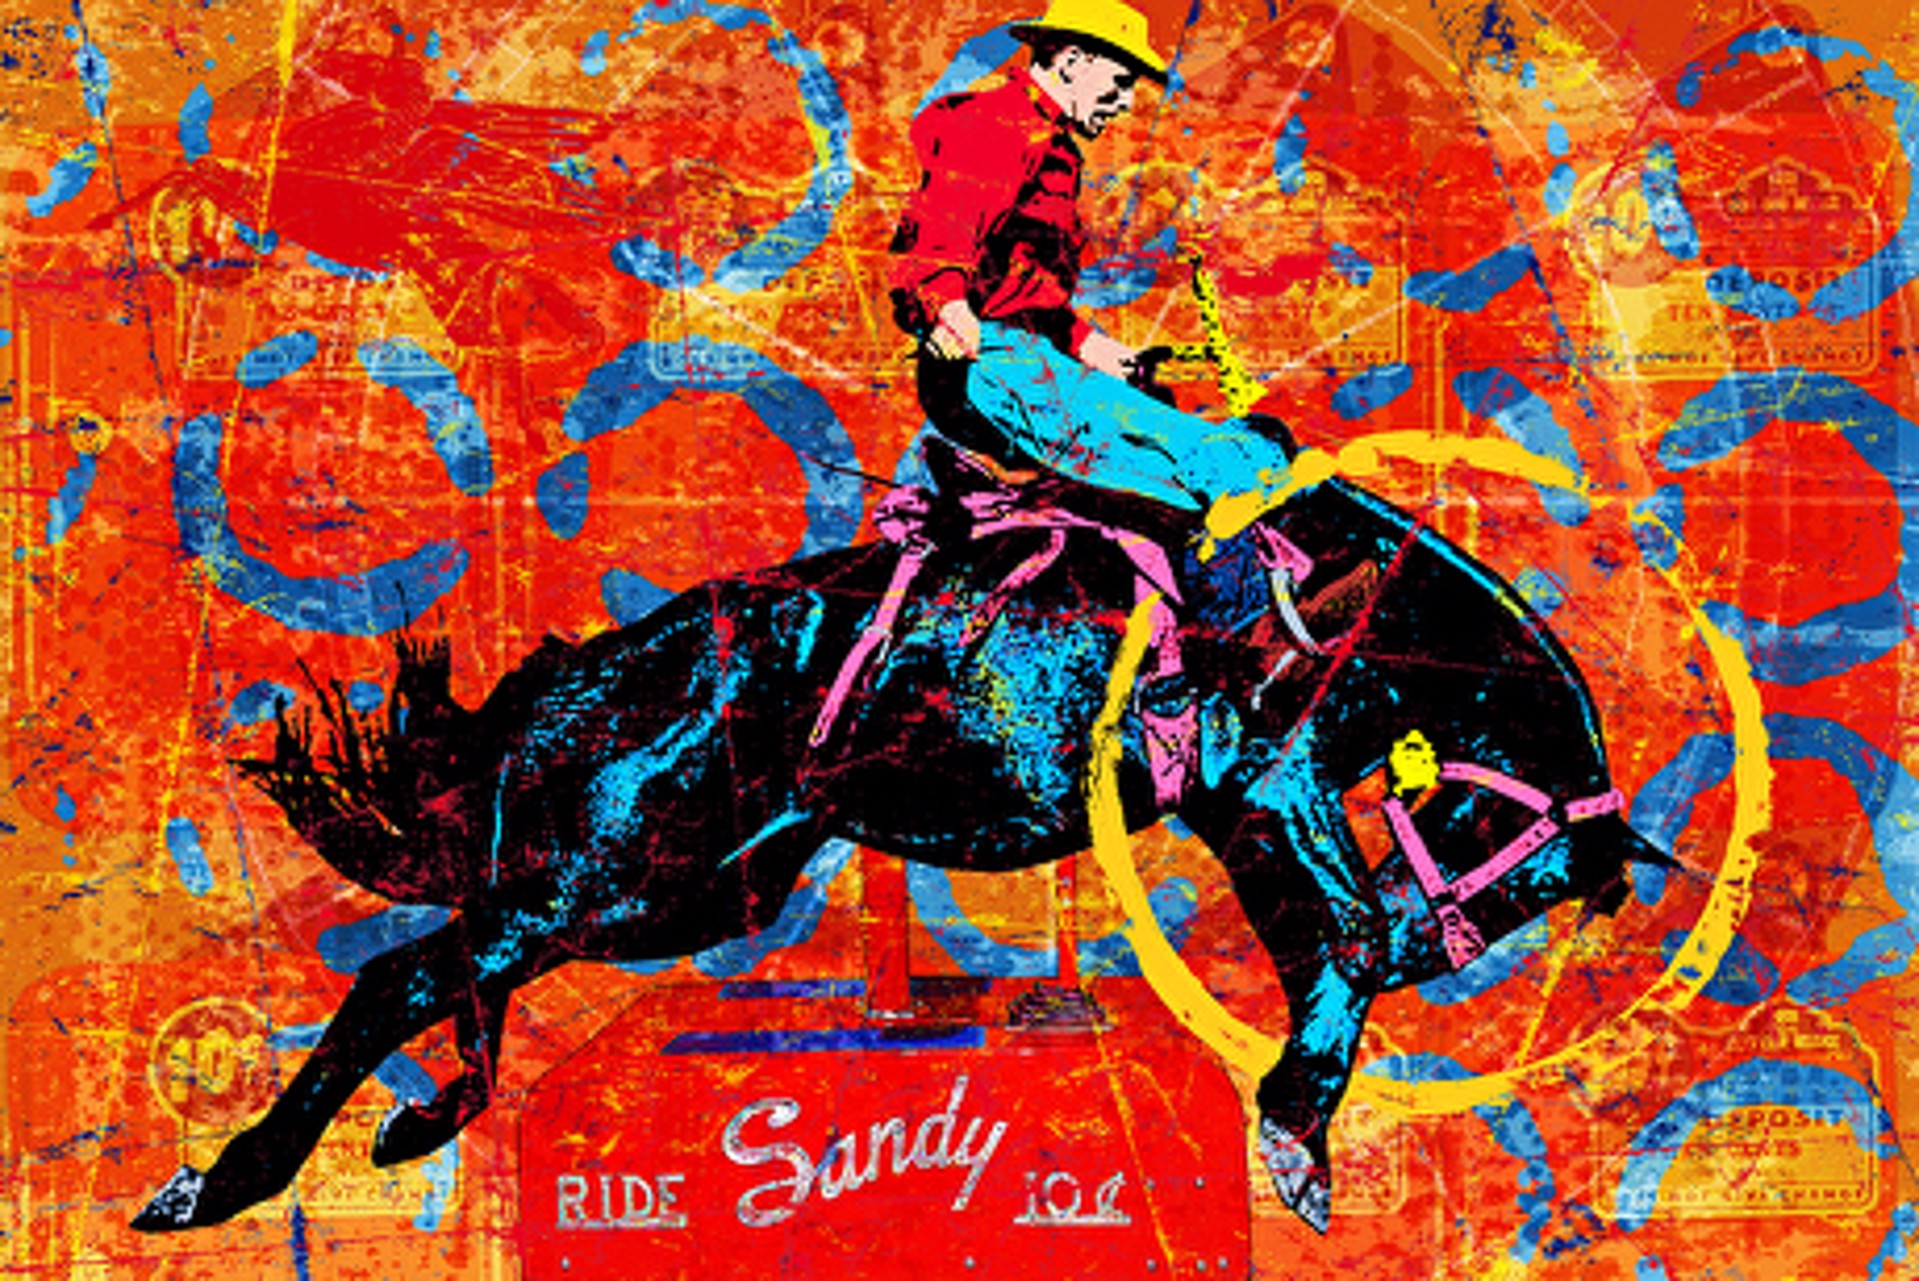 Ride Sandy Ride by Sam Collins